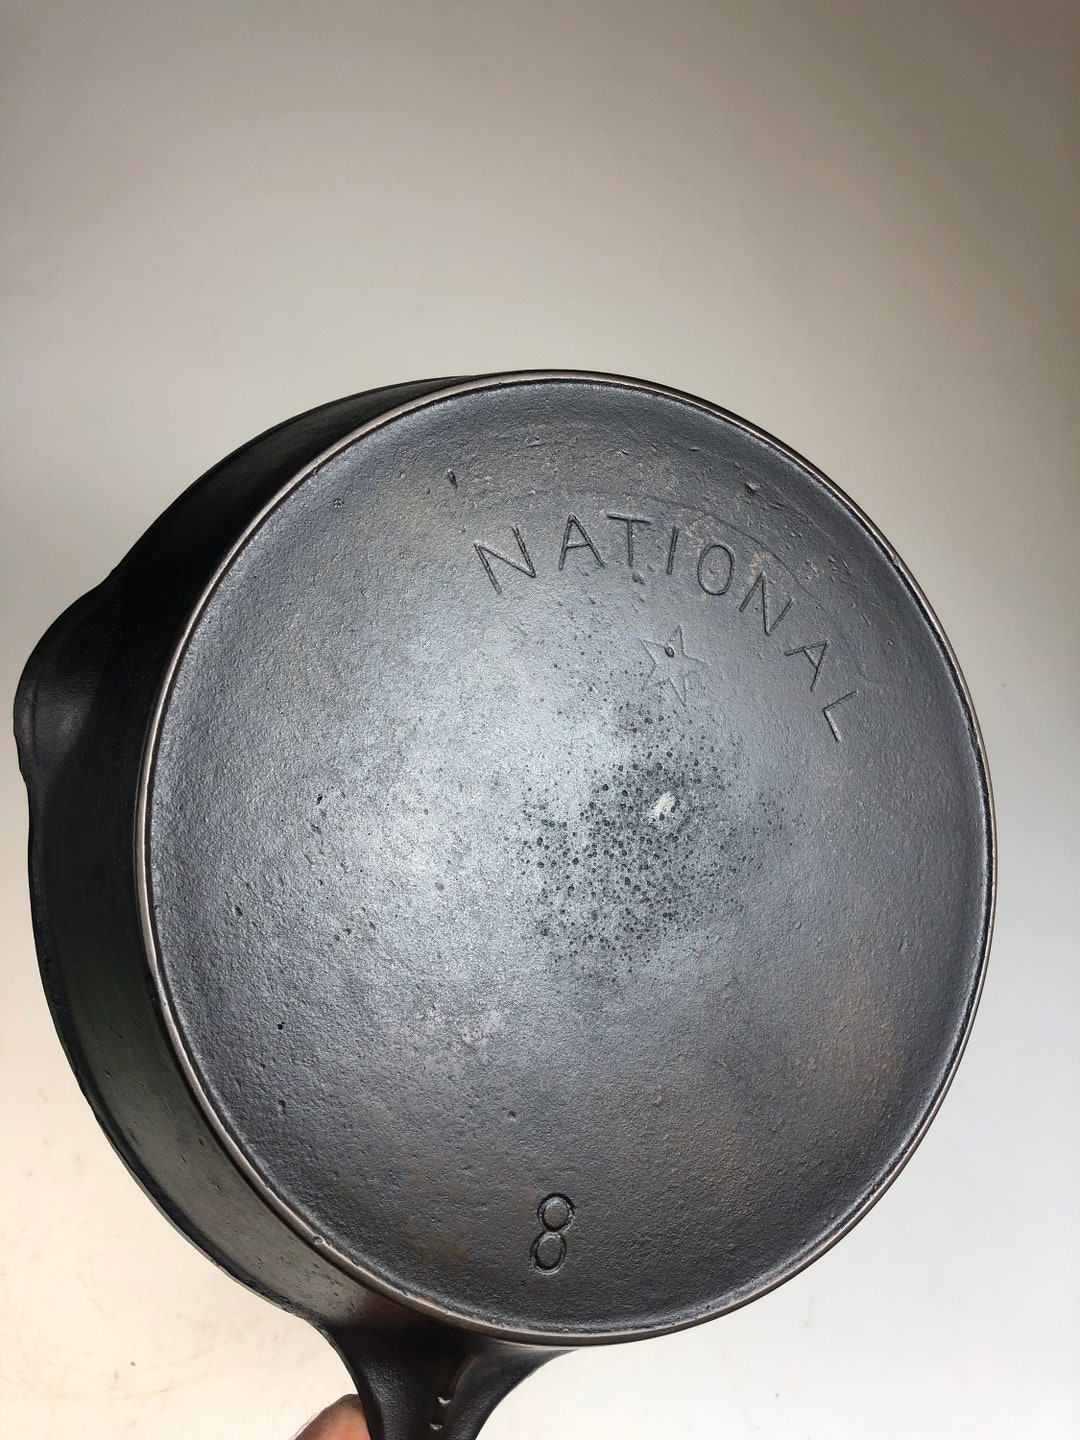 Cast-iron cookware - Wikipedia